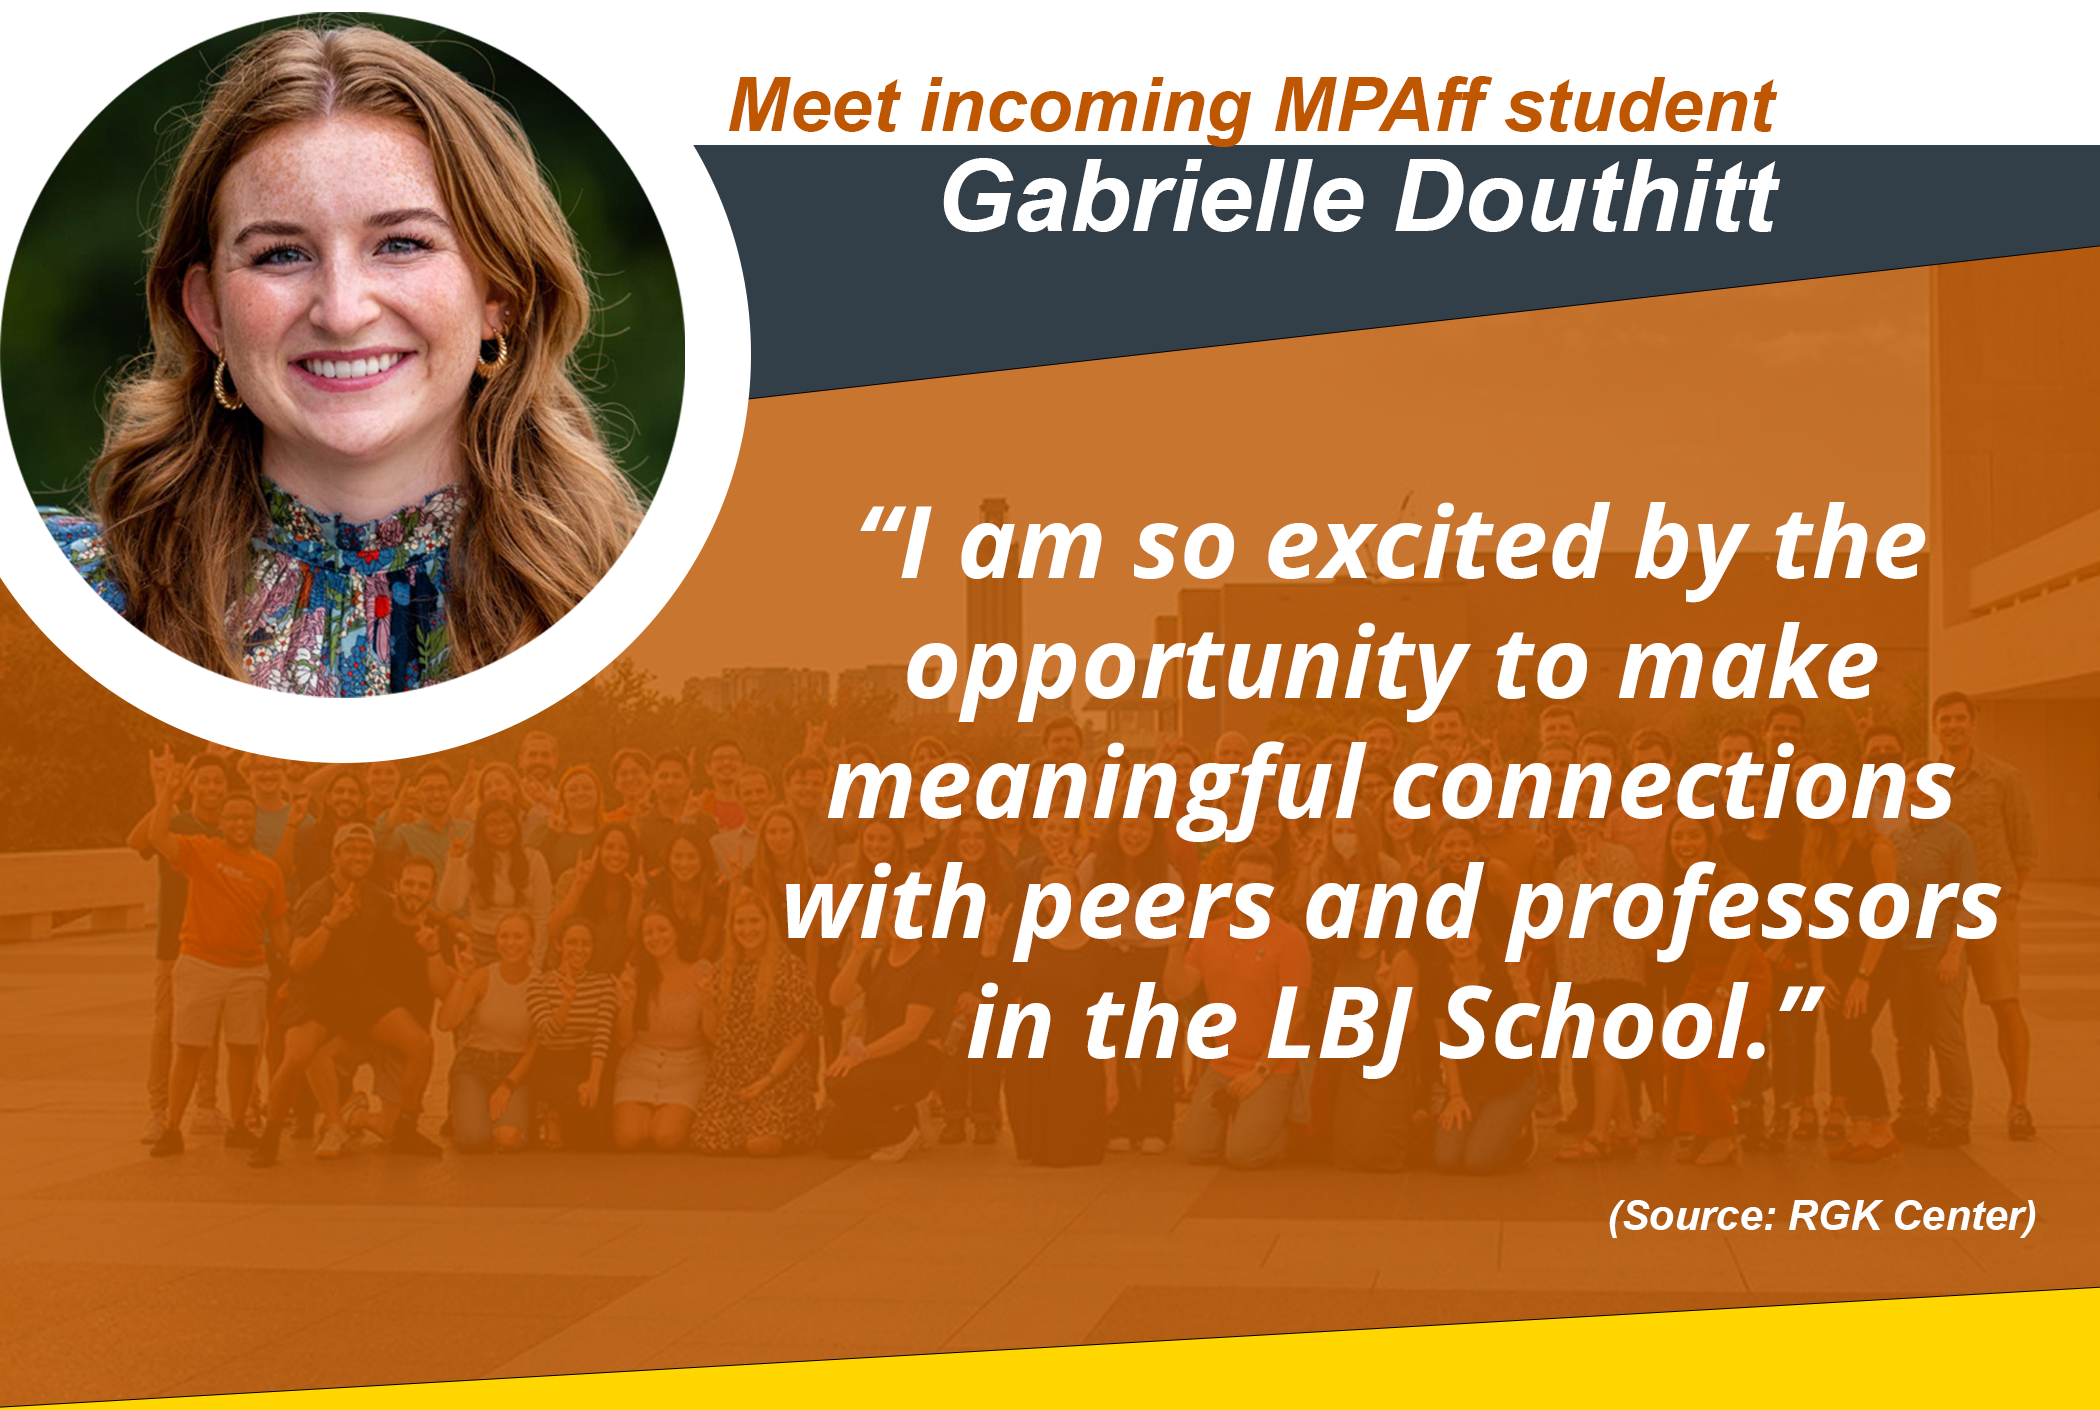 MPAff Student Gabrielle Douthitt